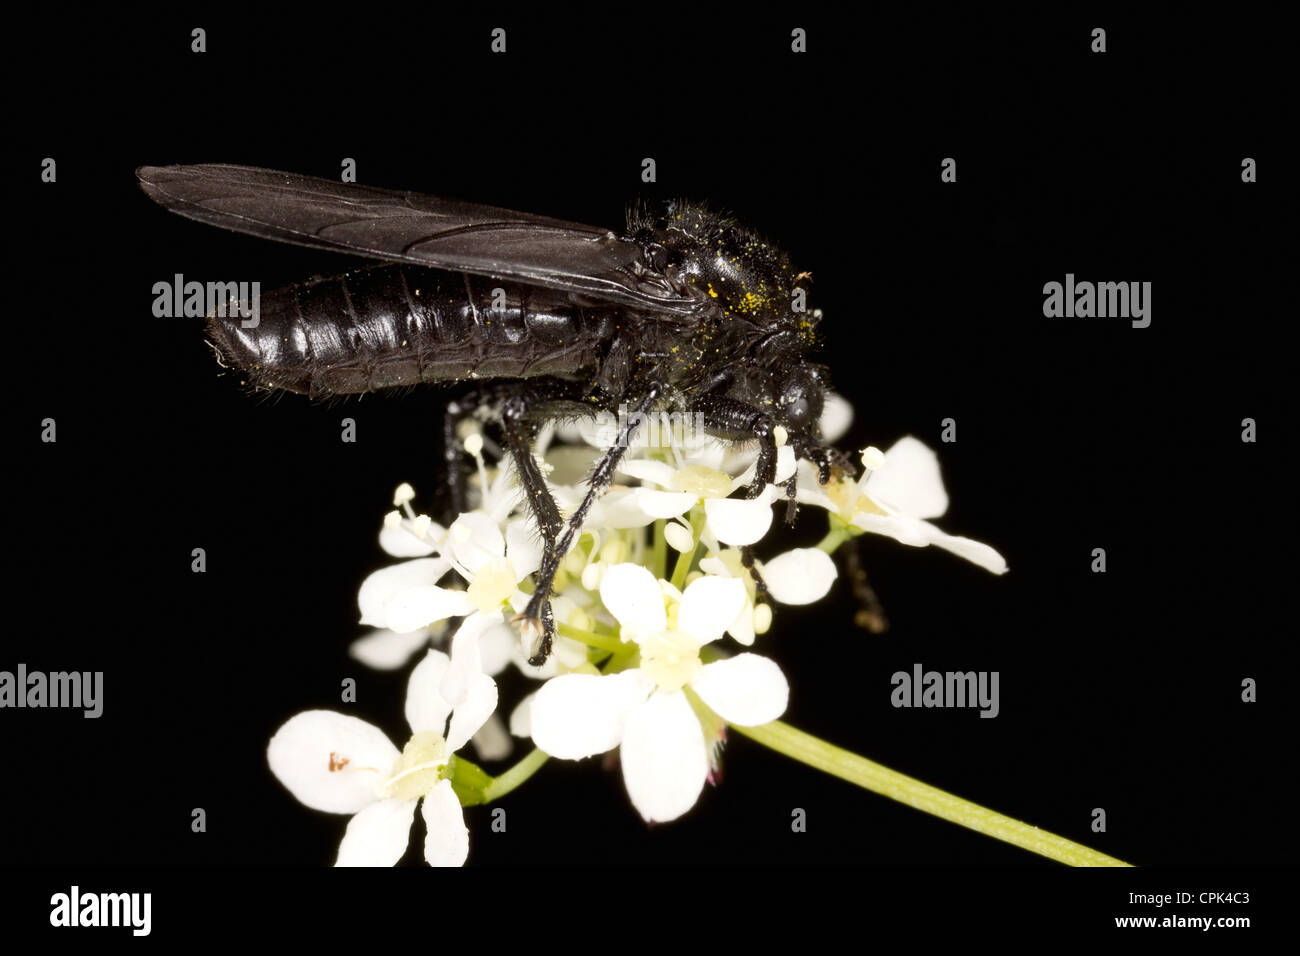 A Black Bee pollunating a flower Stock Photo